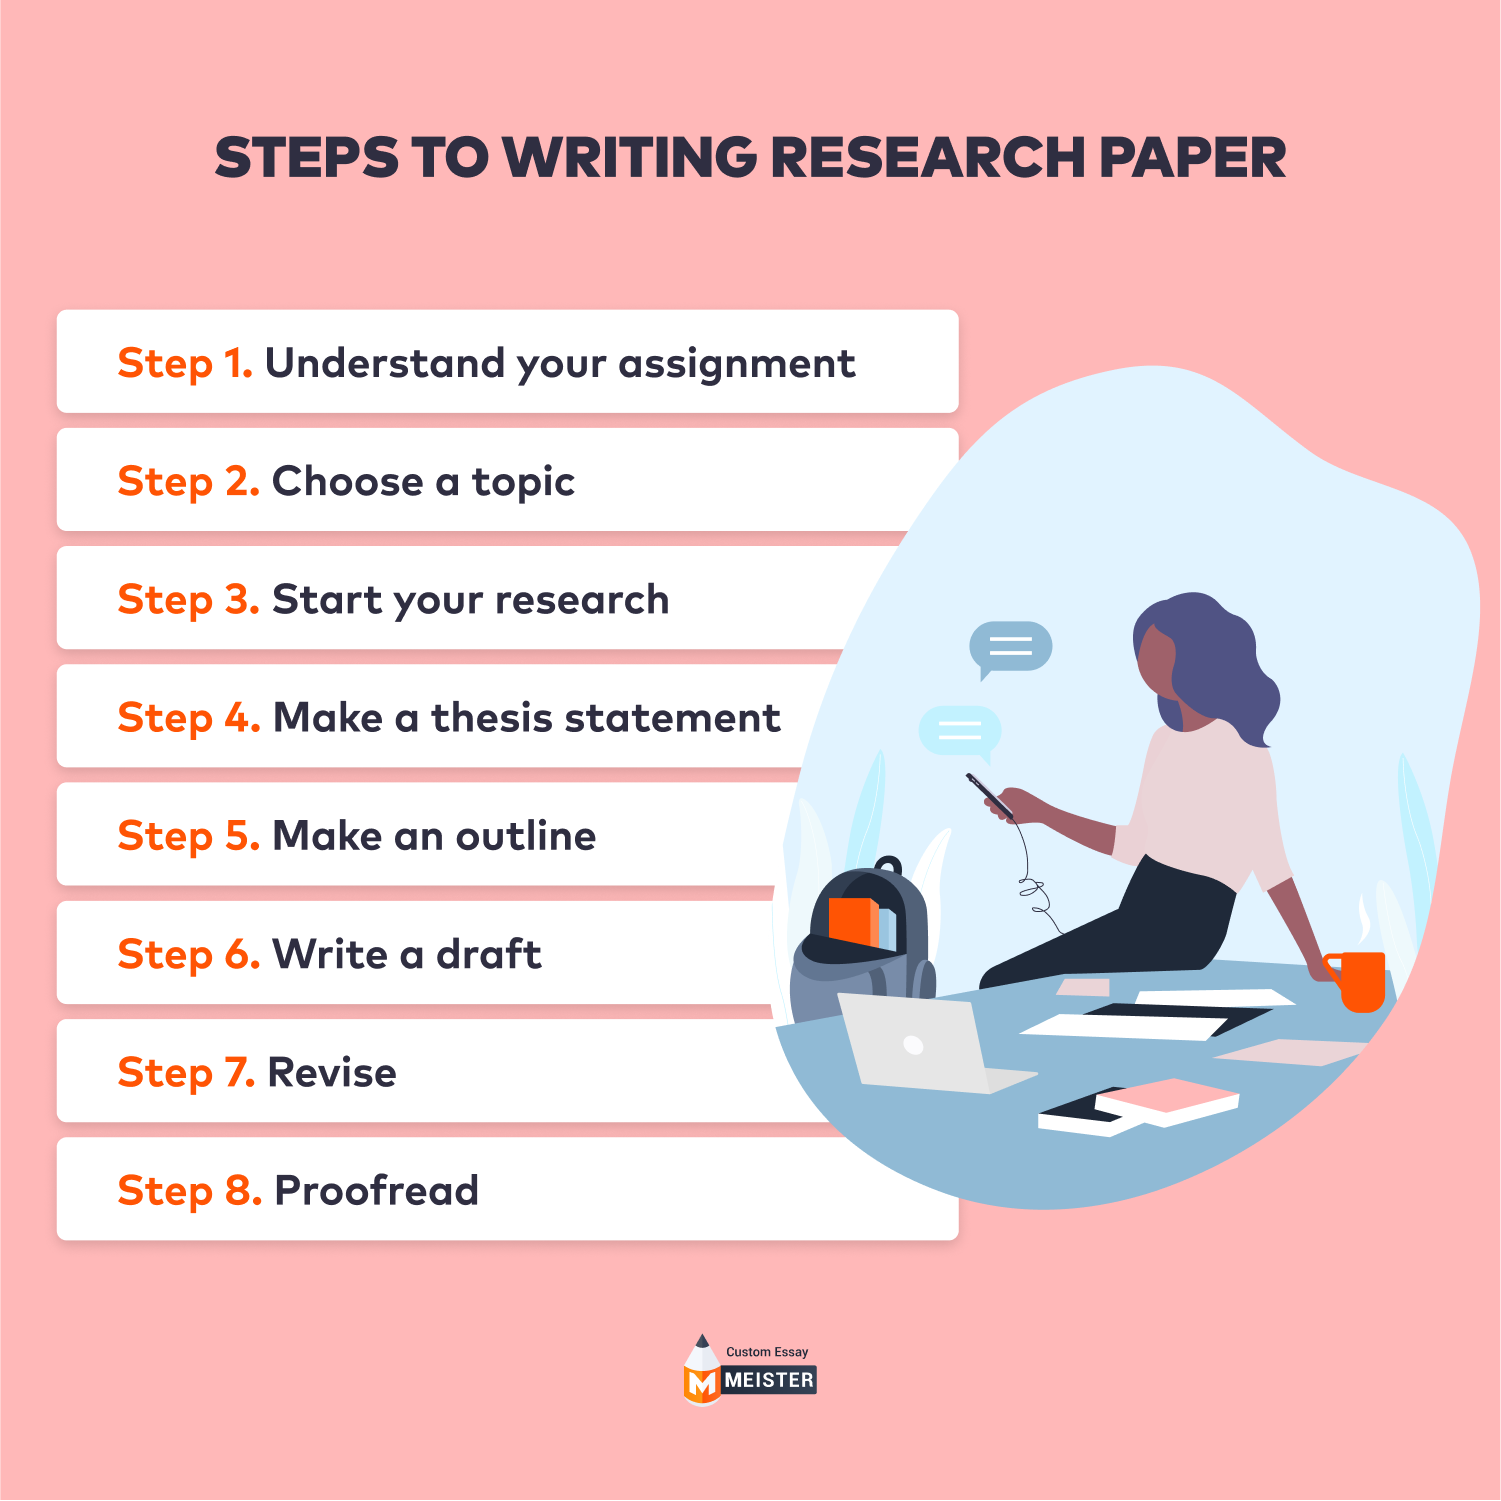 custom research paper writing